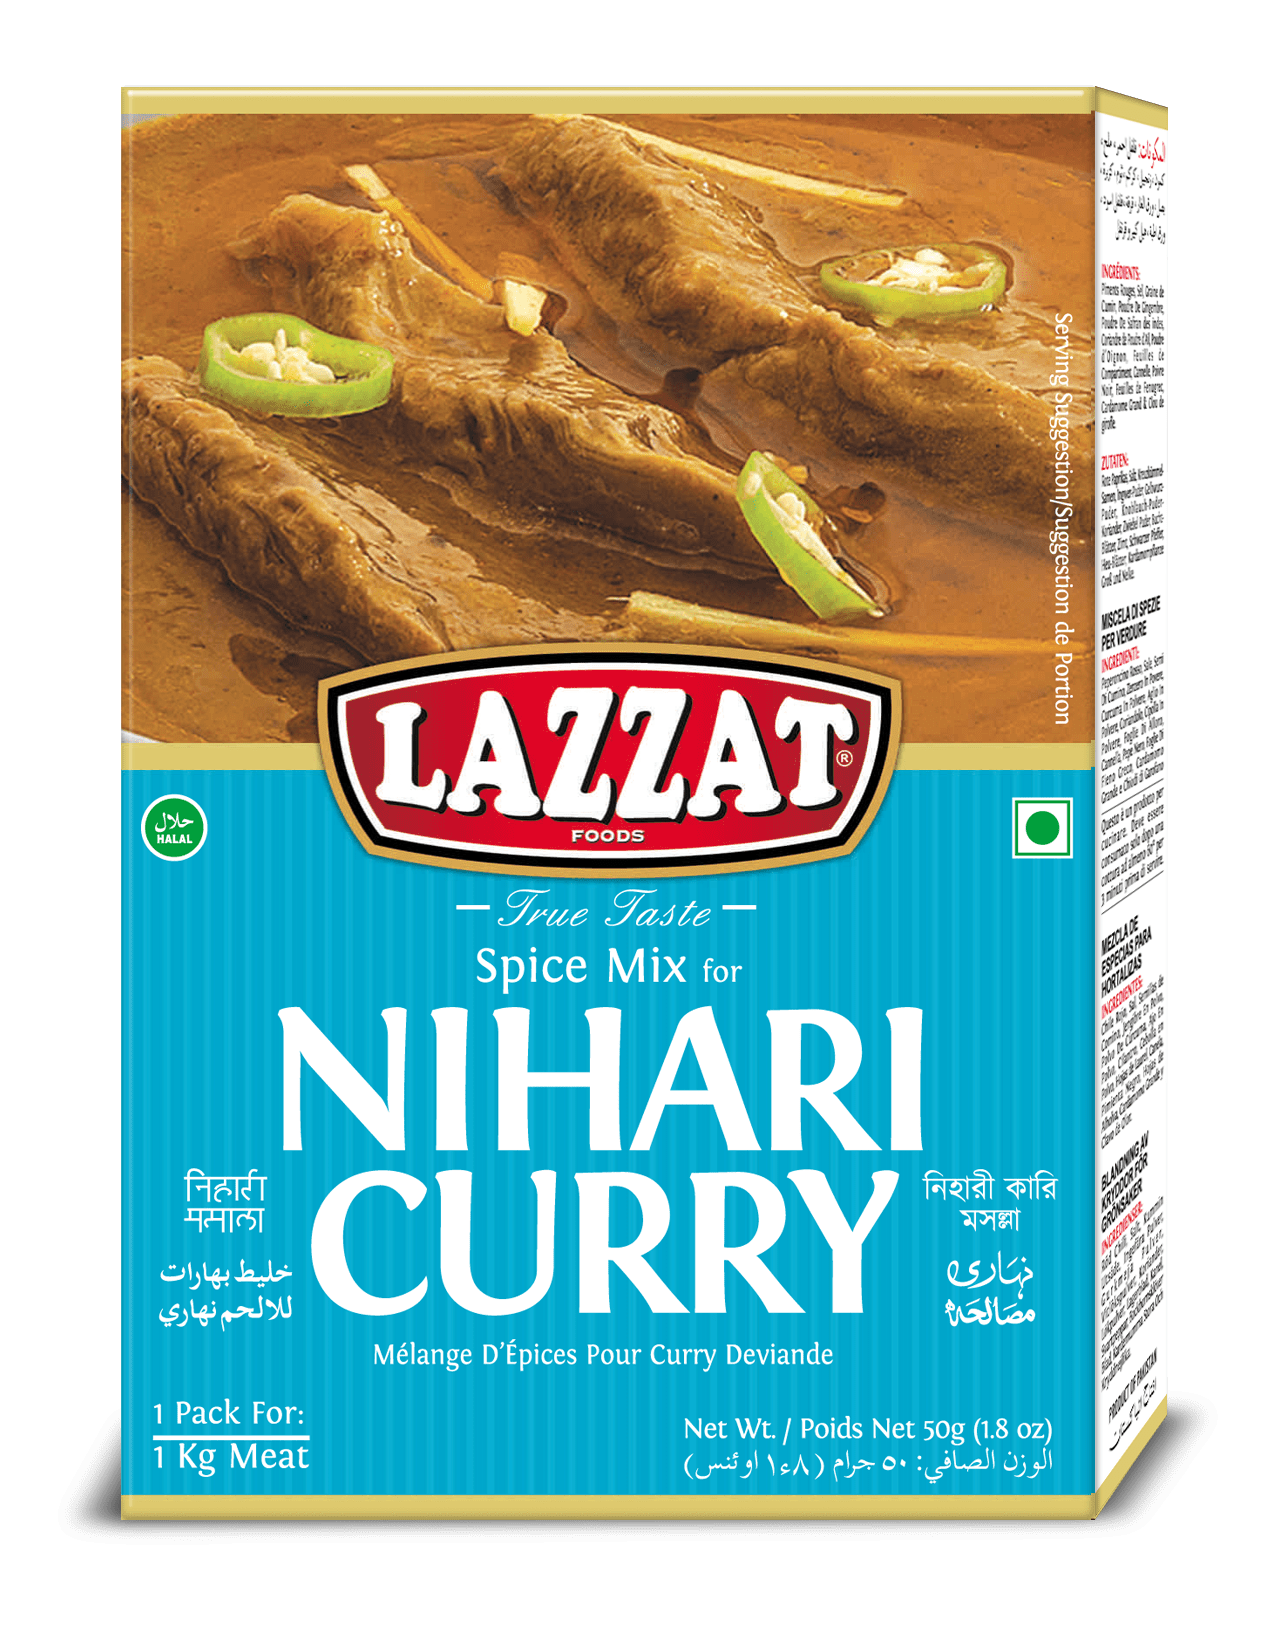 Lazzat Nihari curry